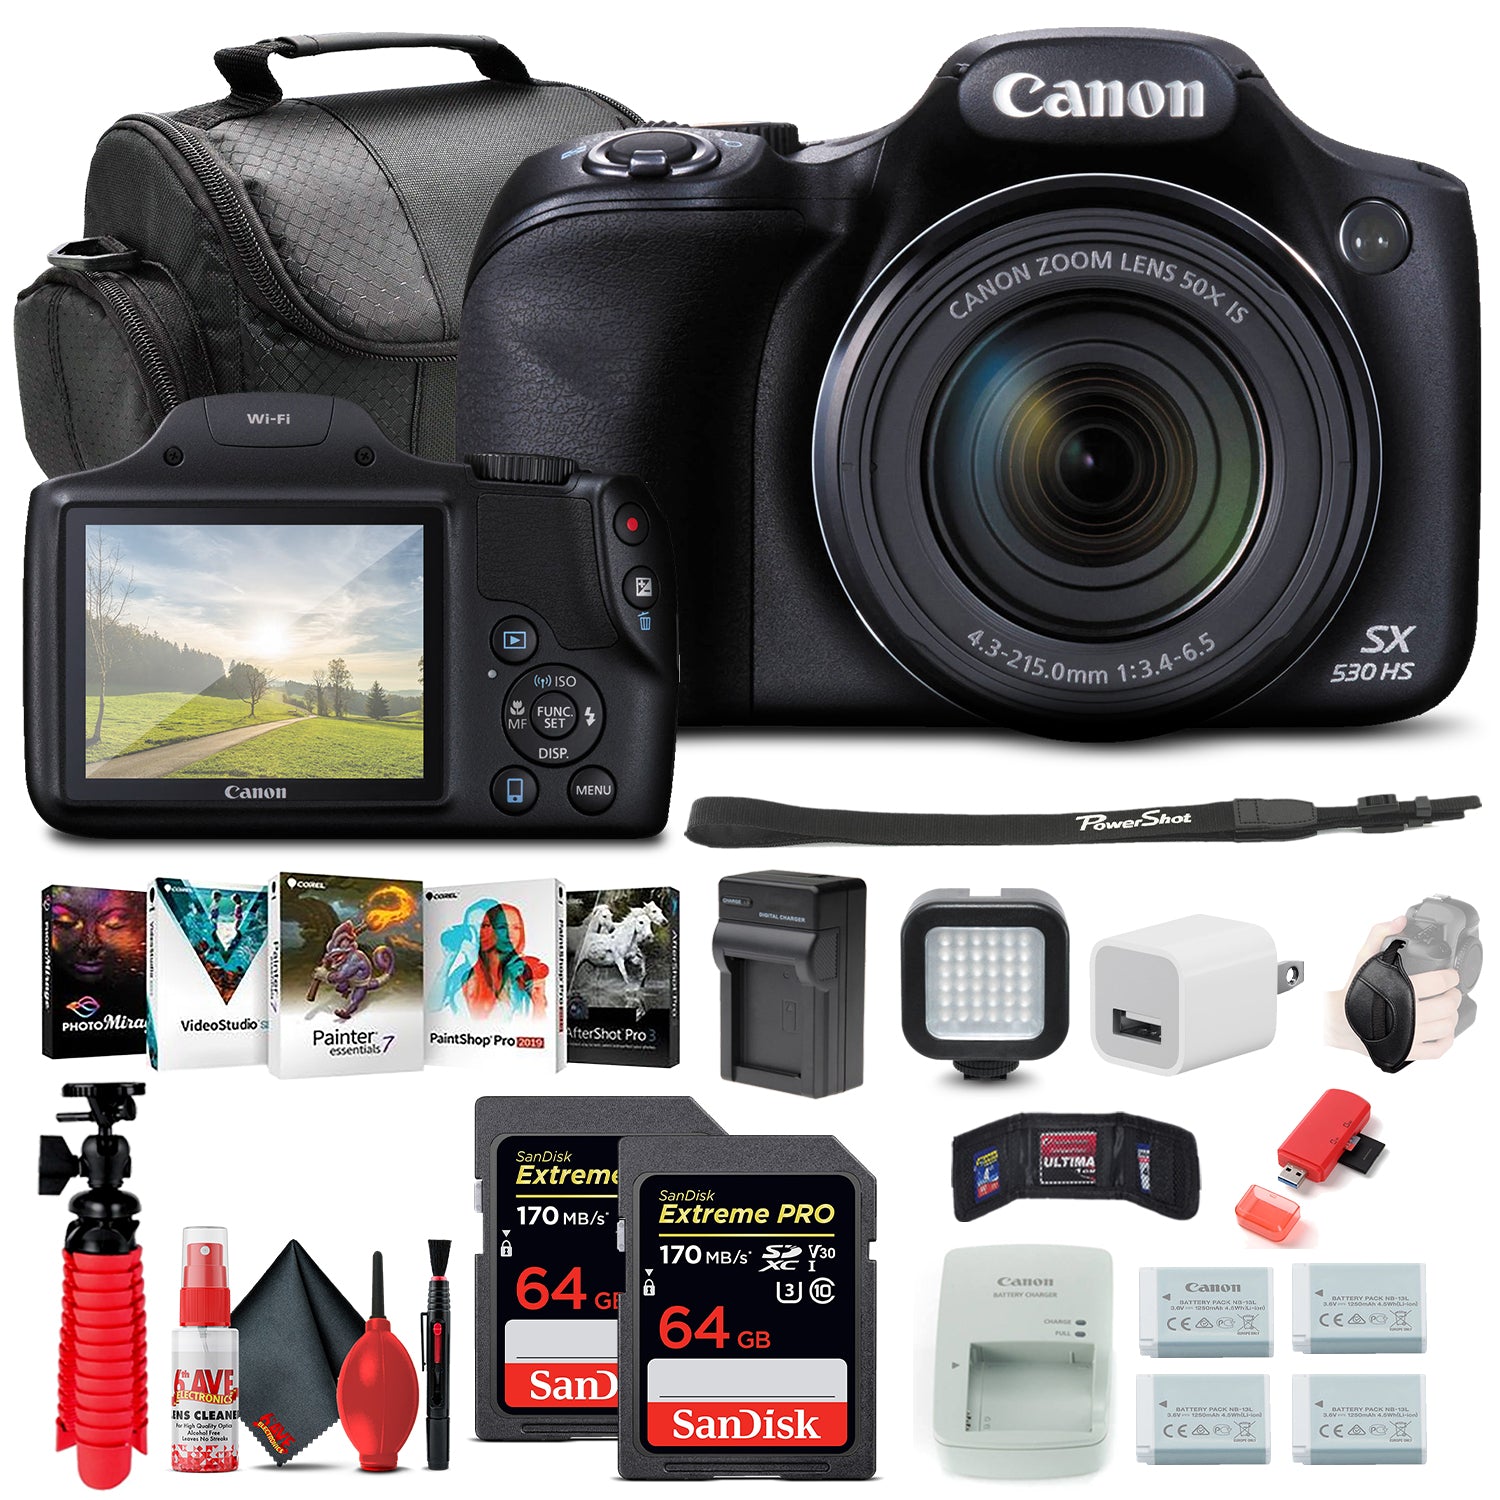 Canon PowerShot SX530 HS Digital Camera (9779B001) + 2 x 64GB Cards + More